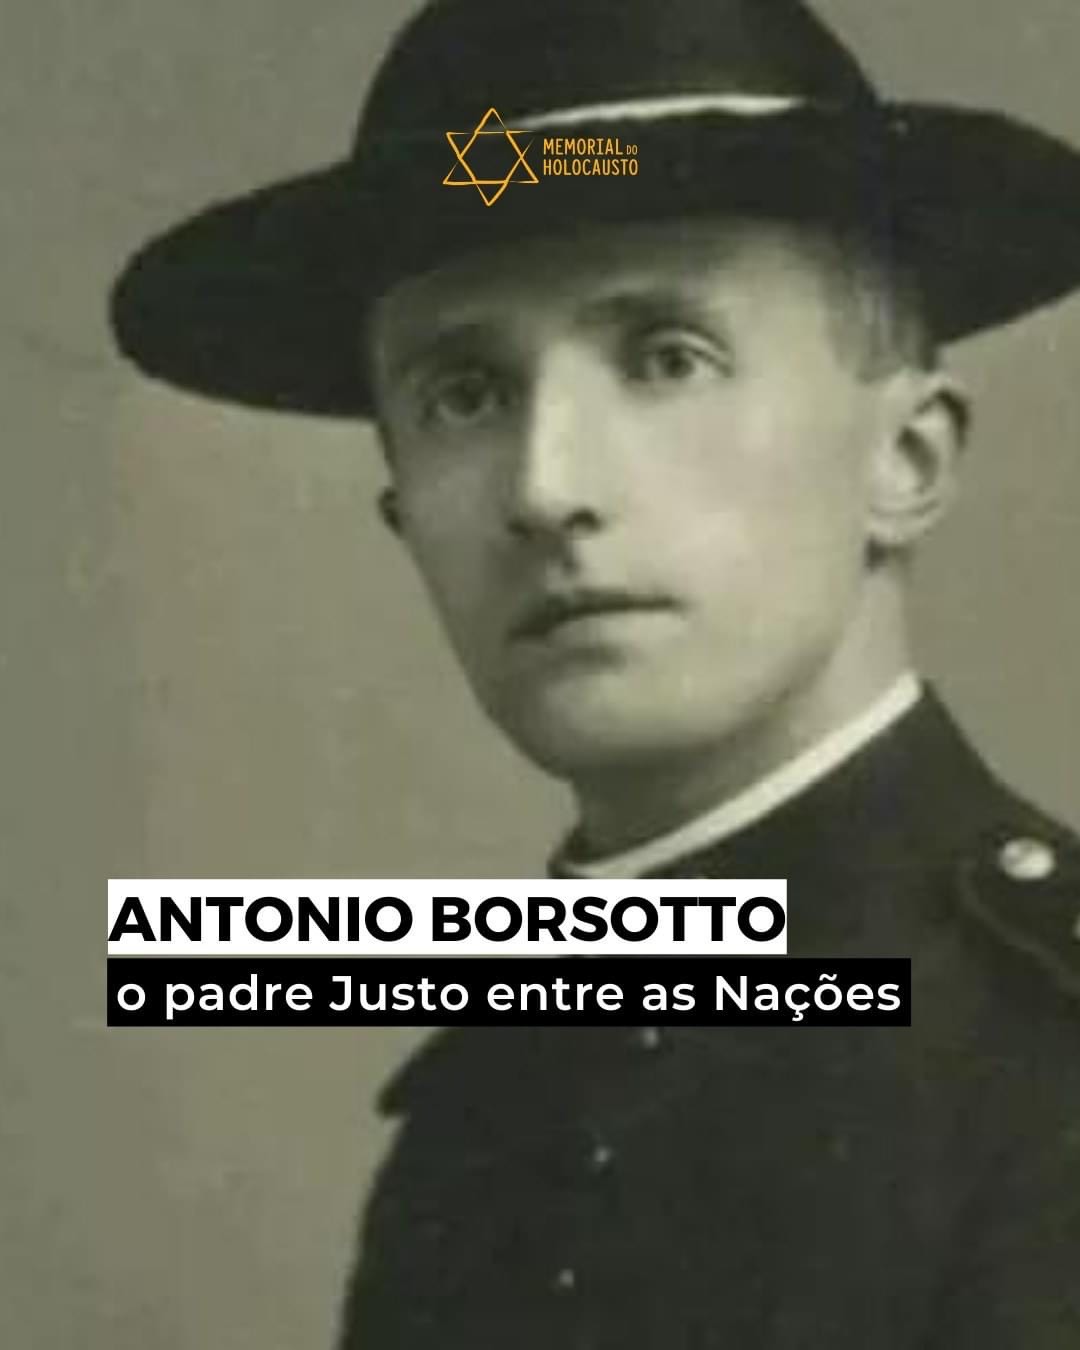 ANTONIO BORSOTTO